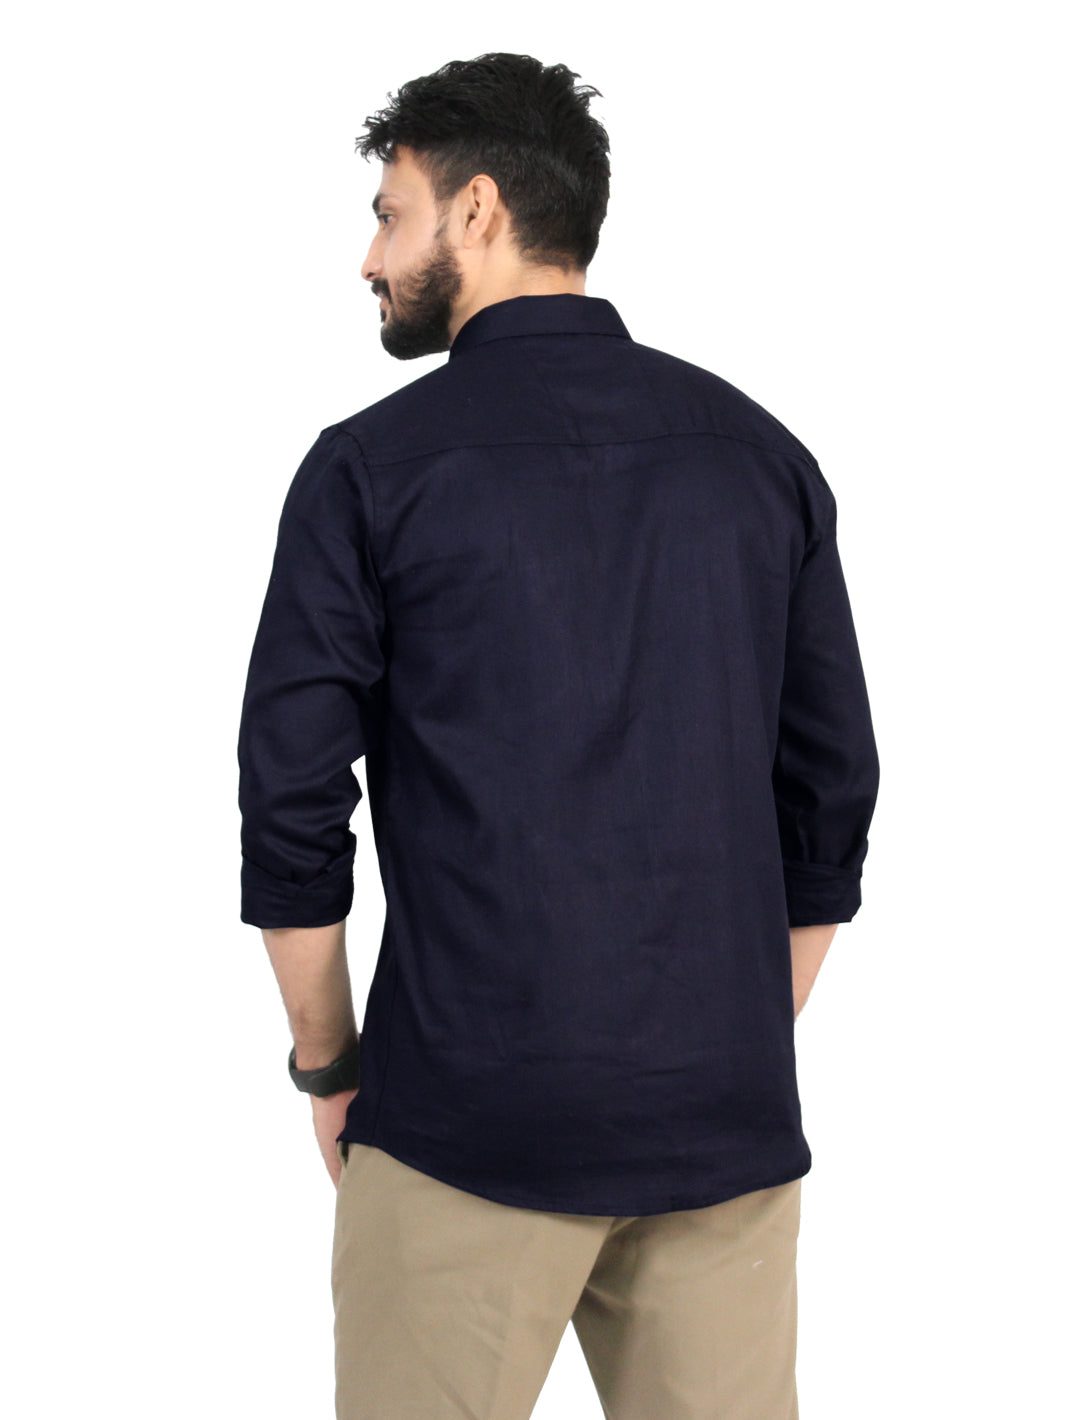 NAVY- Men's Cotton Plain Dark Blue Shirt